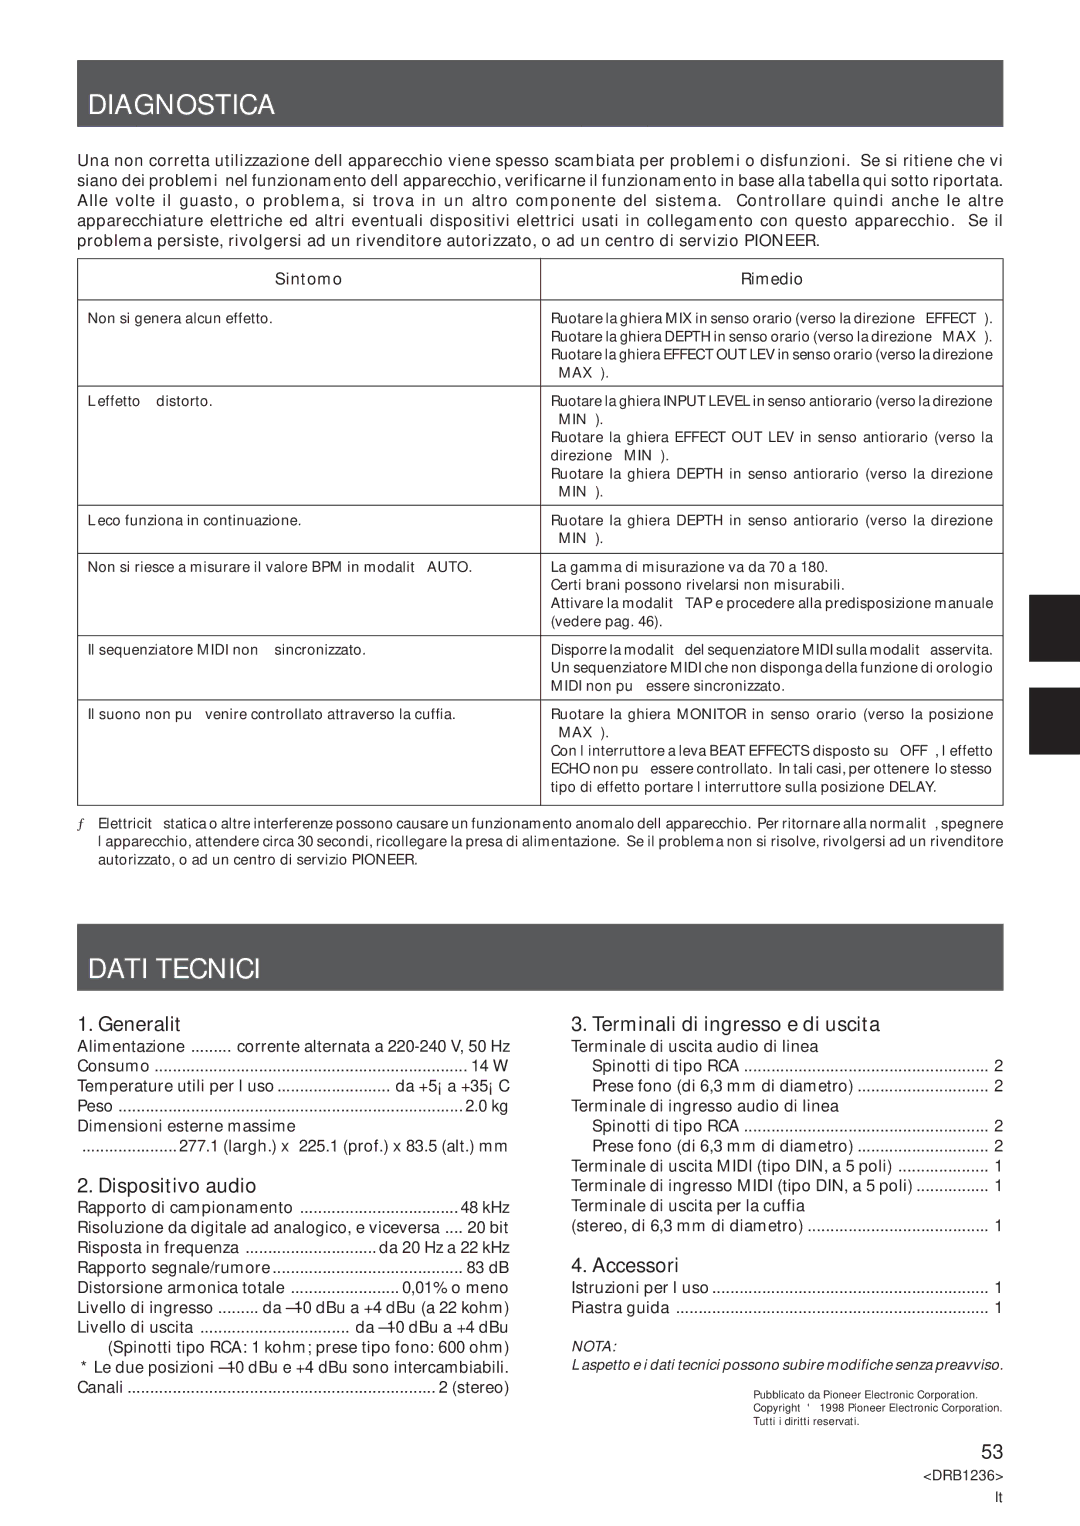 Pioneer Efx-500 operating instructions Diagnostica, Dati Tecnici 